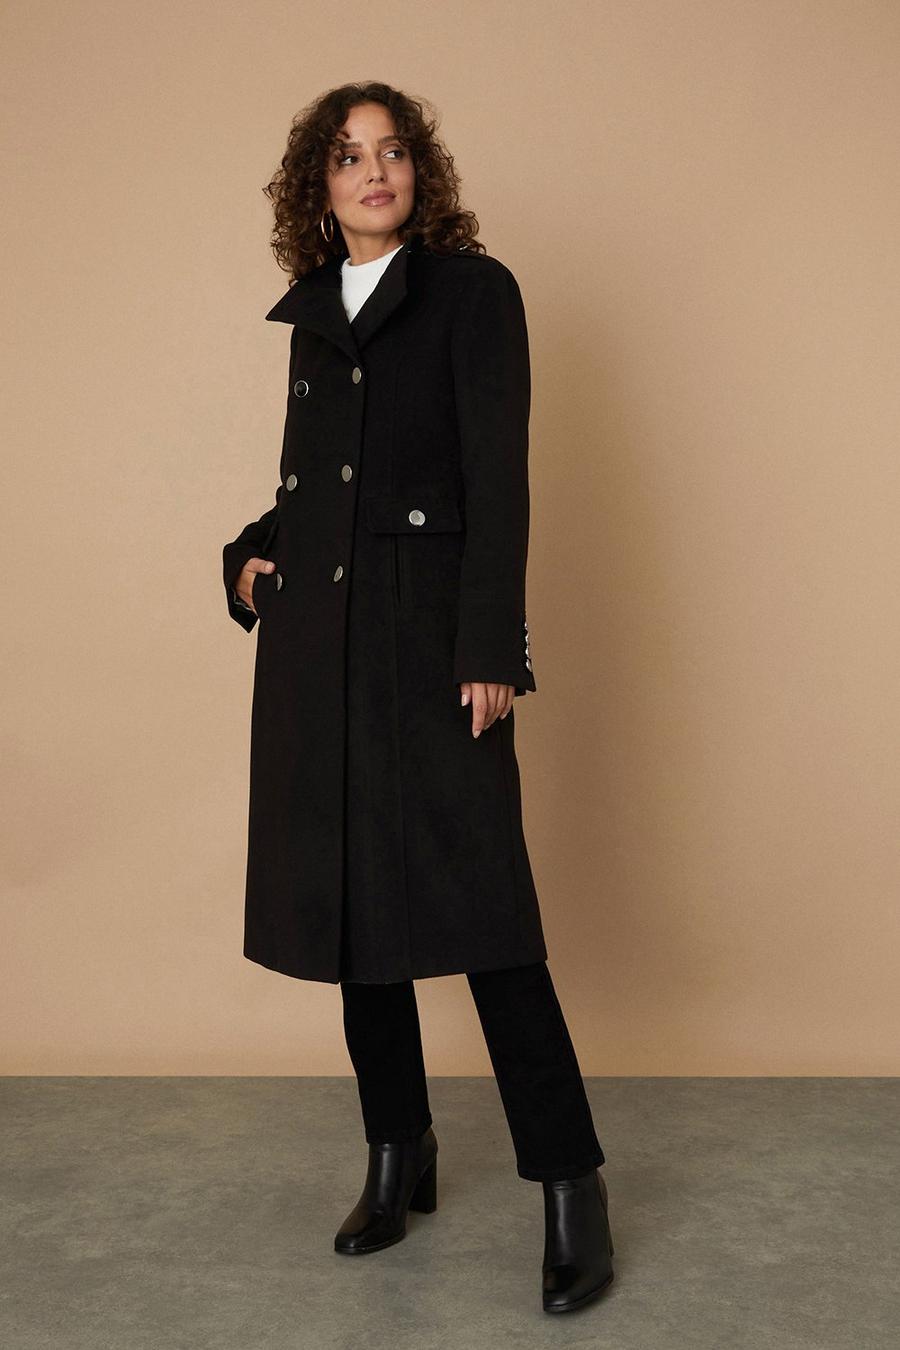 Women's Coats & Jackets | Wallis UK